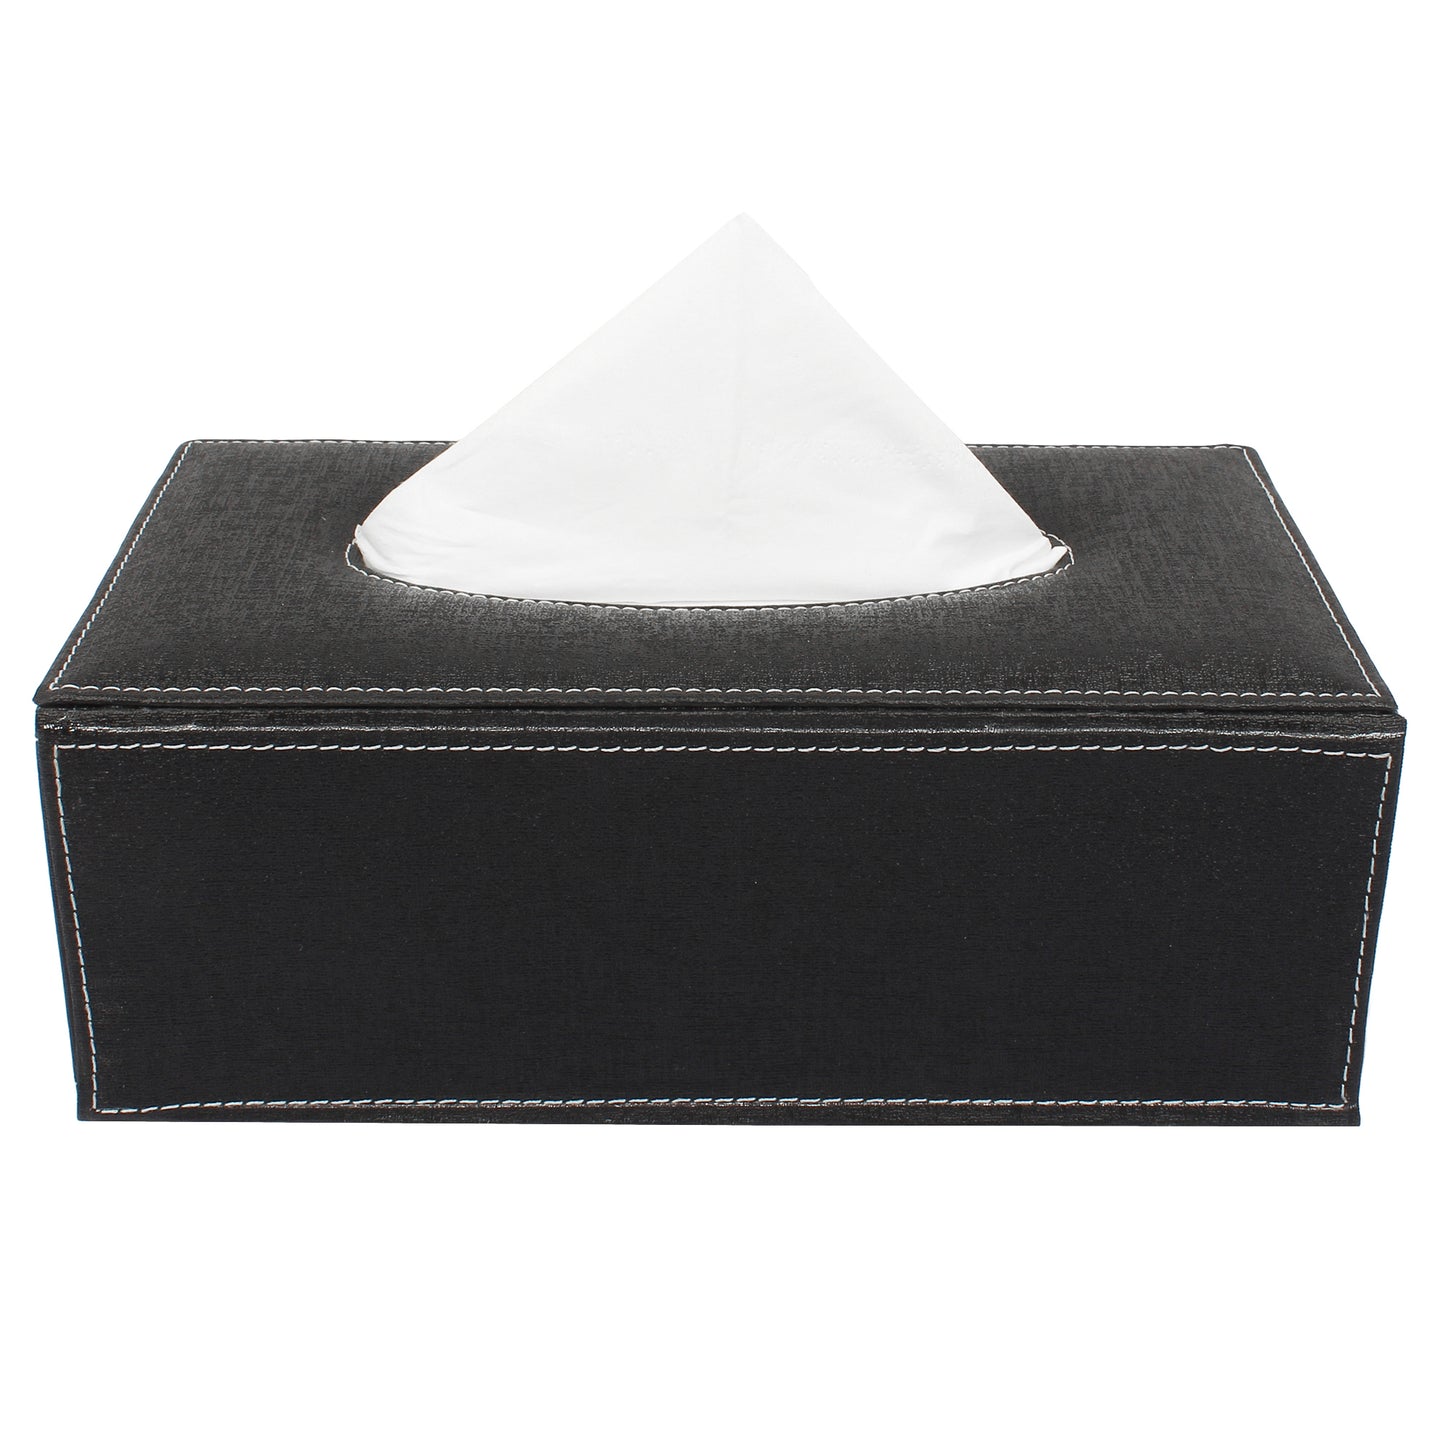 Black Tissue Box